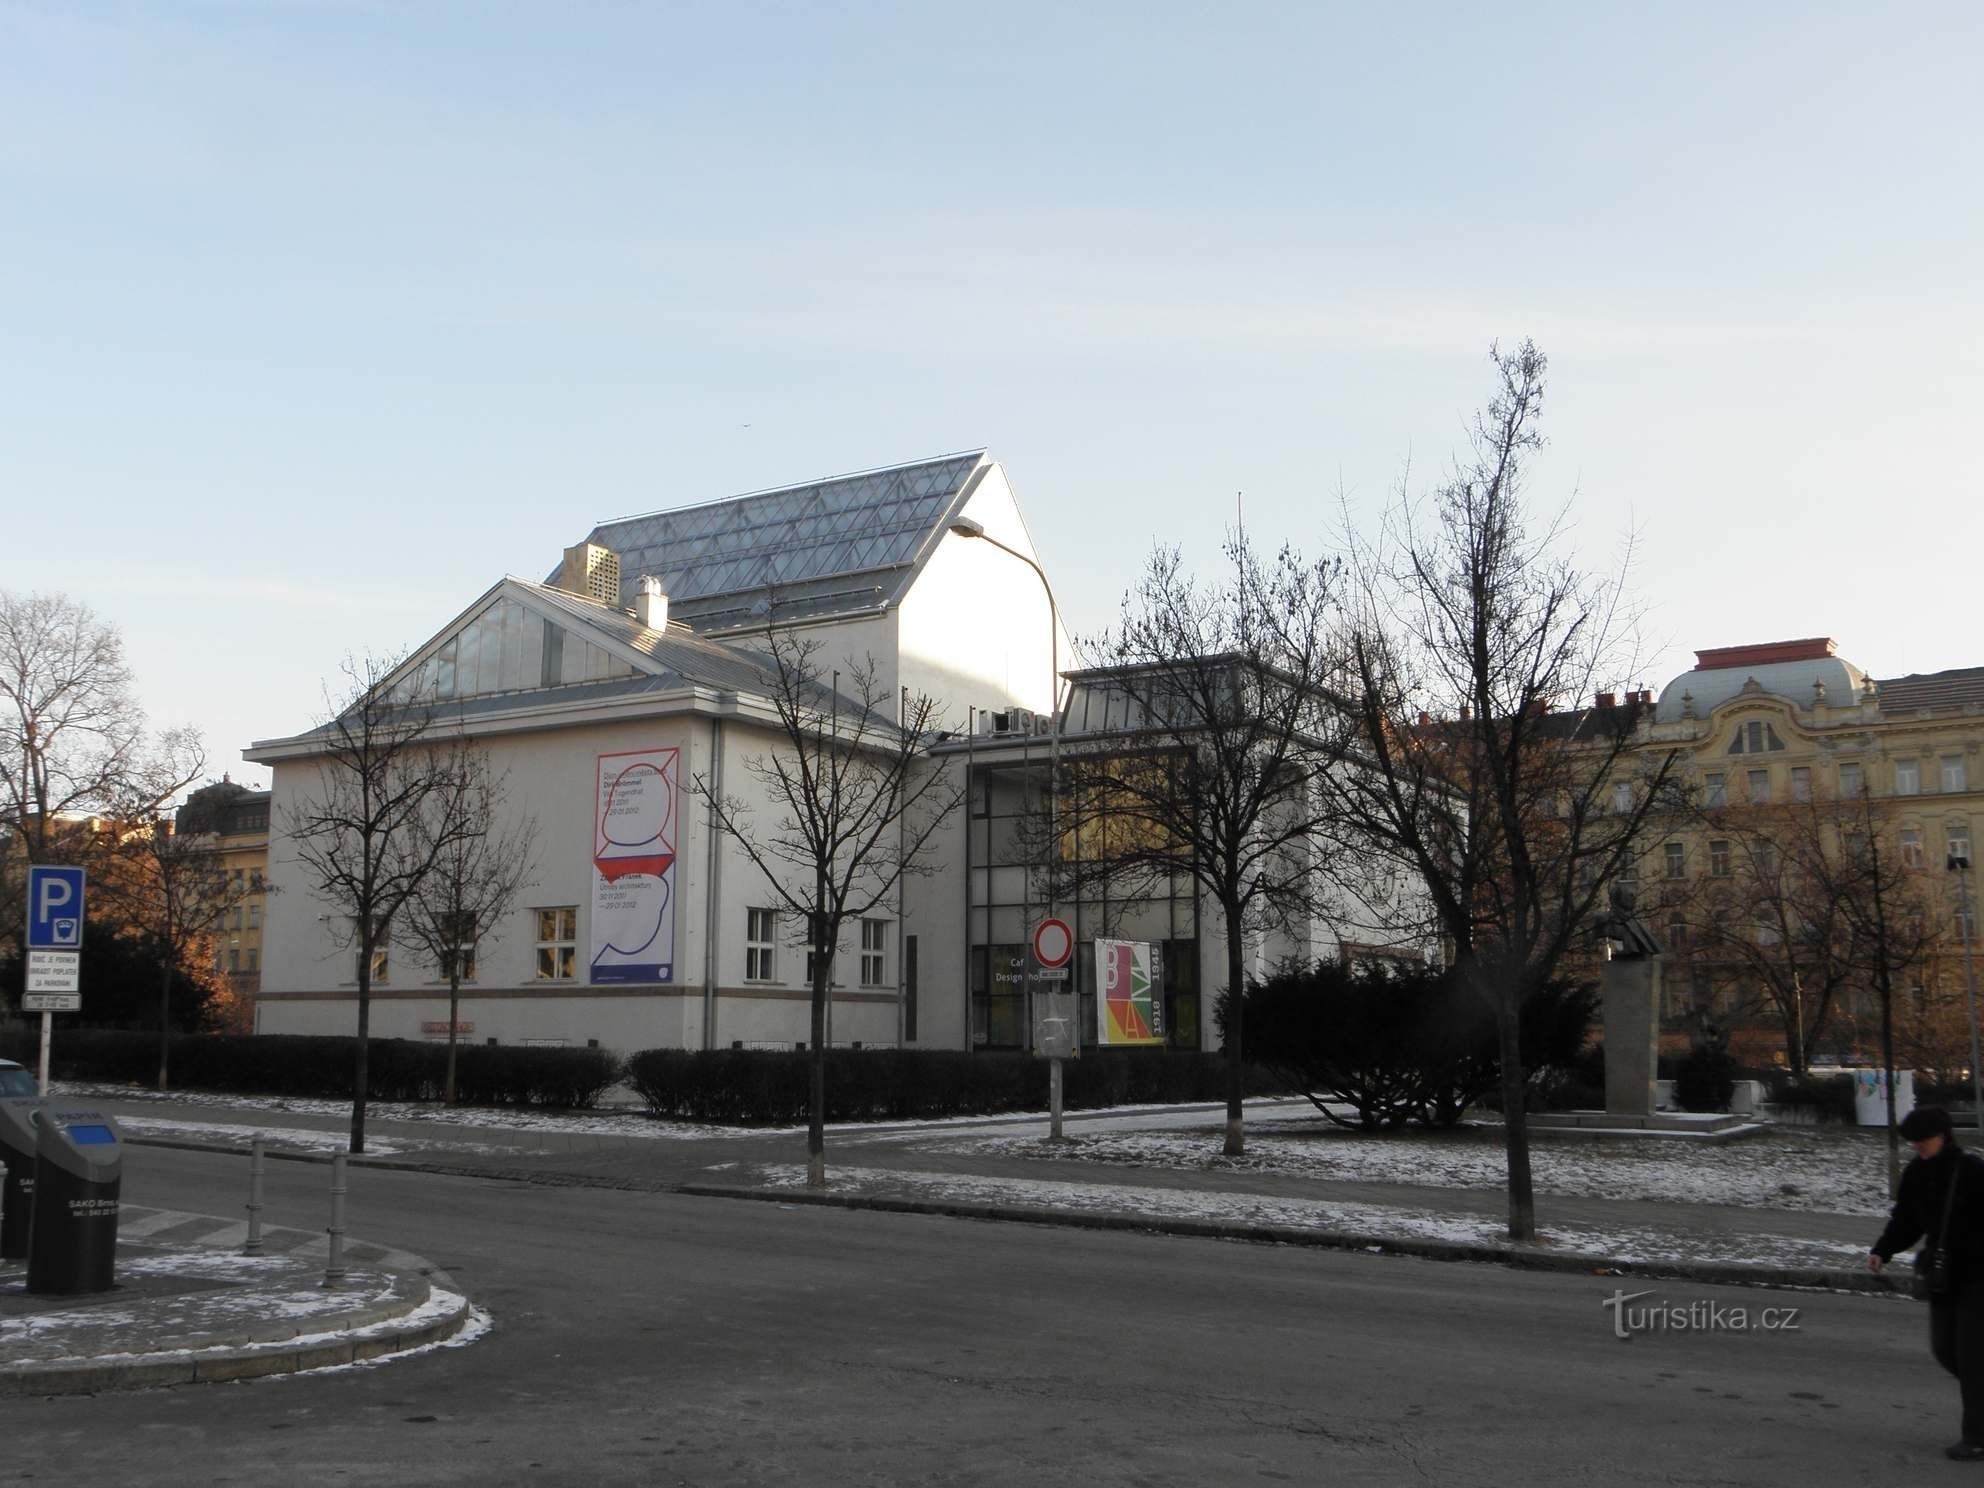 House of Art of the City of Brno - February 10.2.2012, XNUMX